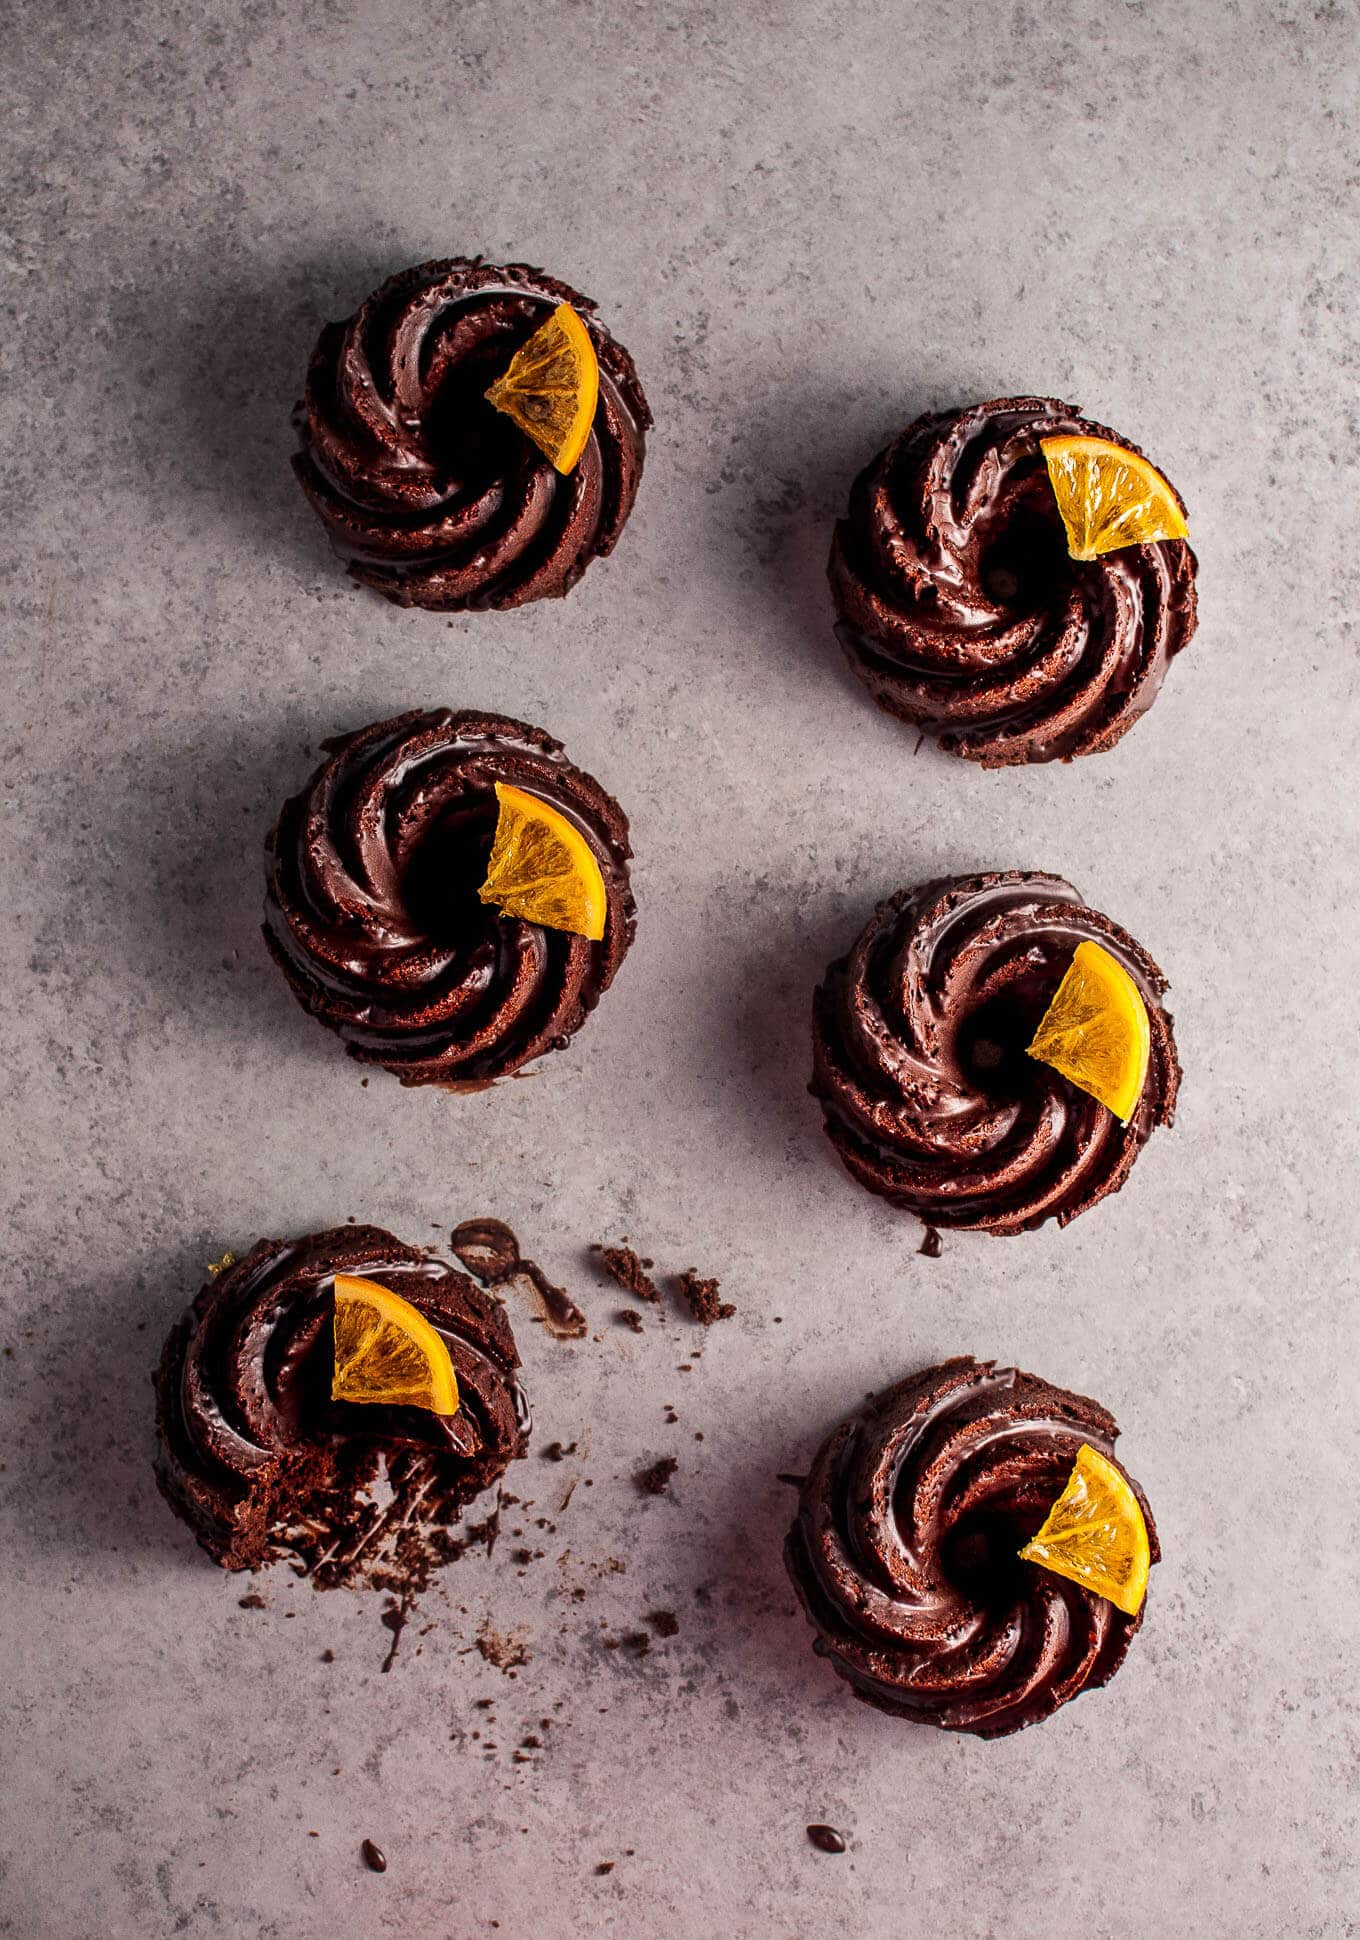 Mini Chocolate Bundt Cakes with Candied Orange Slices • Salt & Lavender